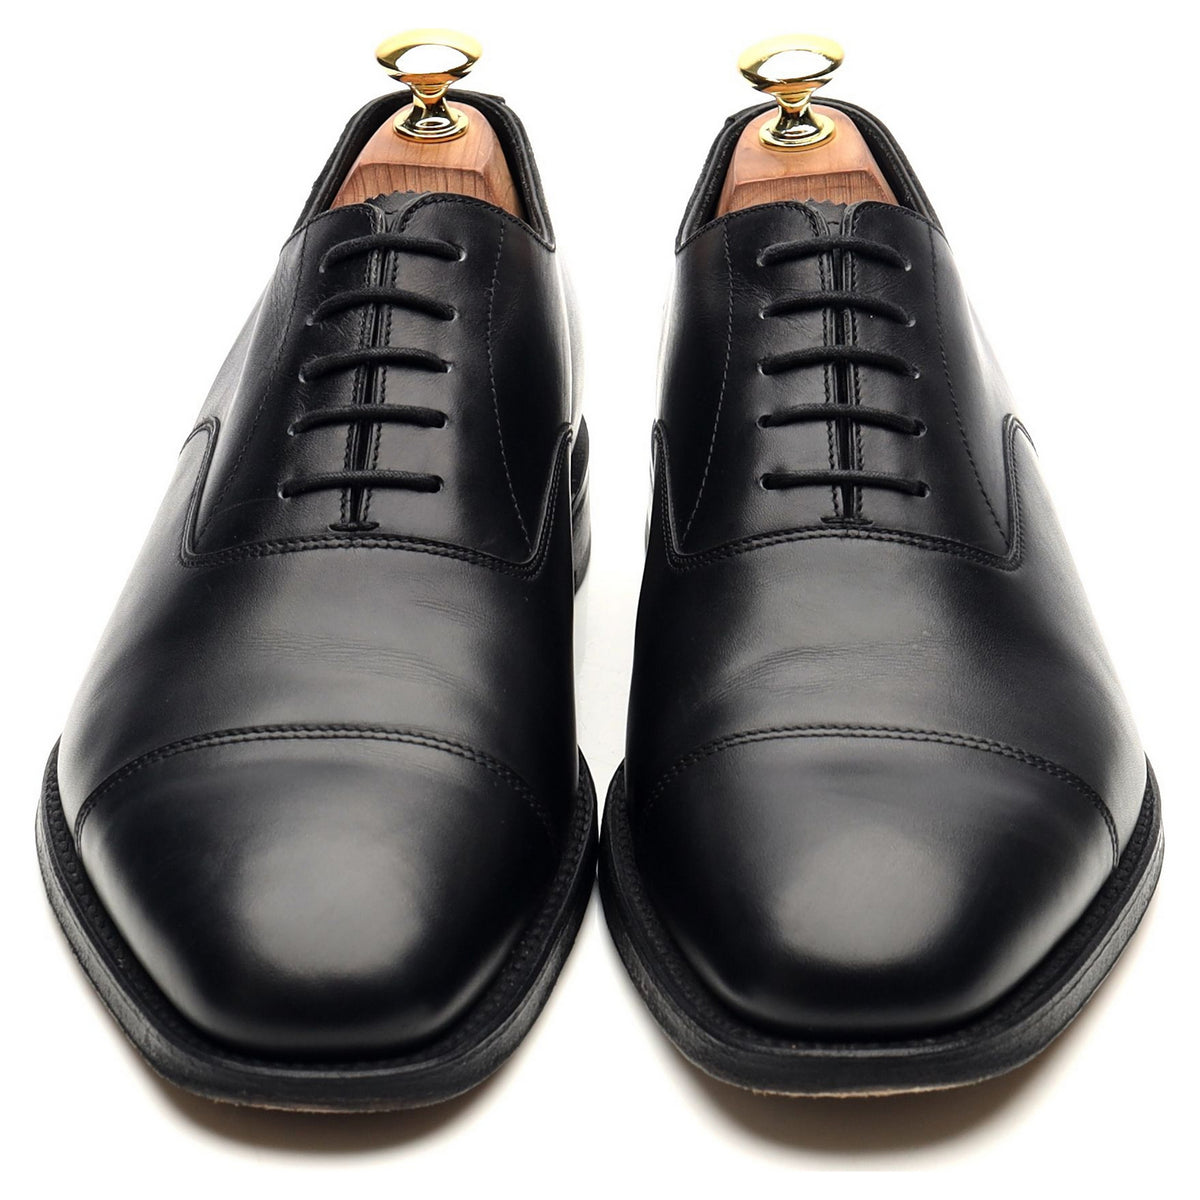 1880 &#39;Aldwych&#39; Black Leather Oxford UK 8.5 F